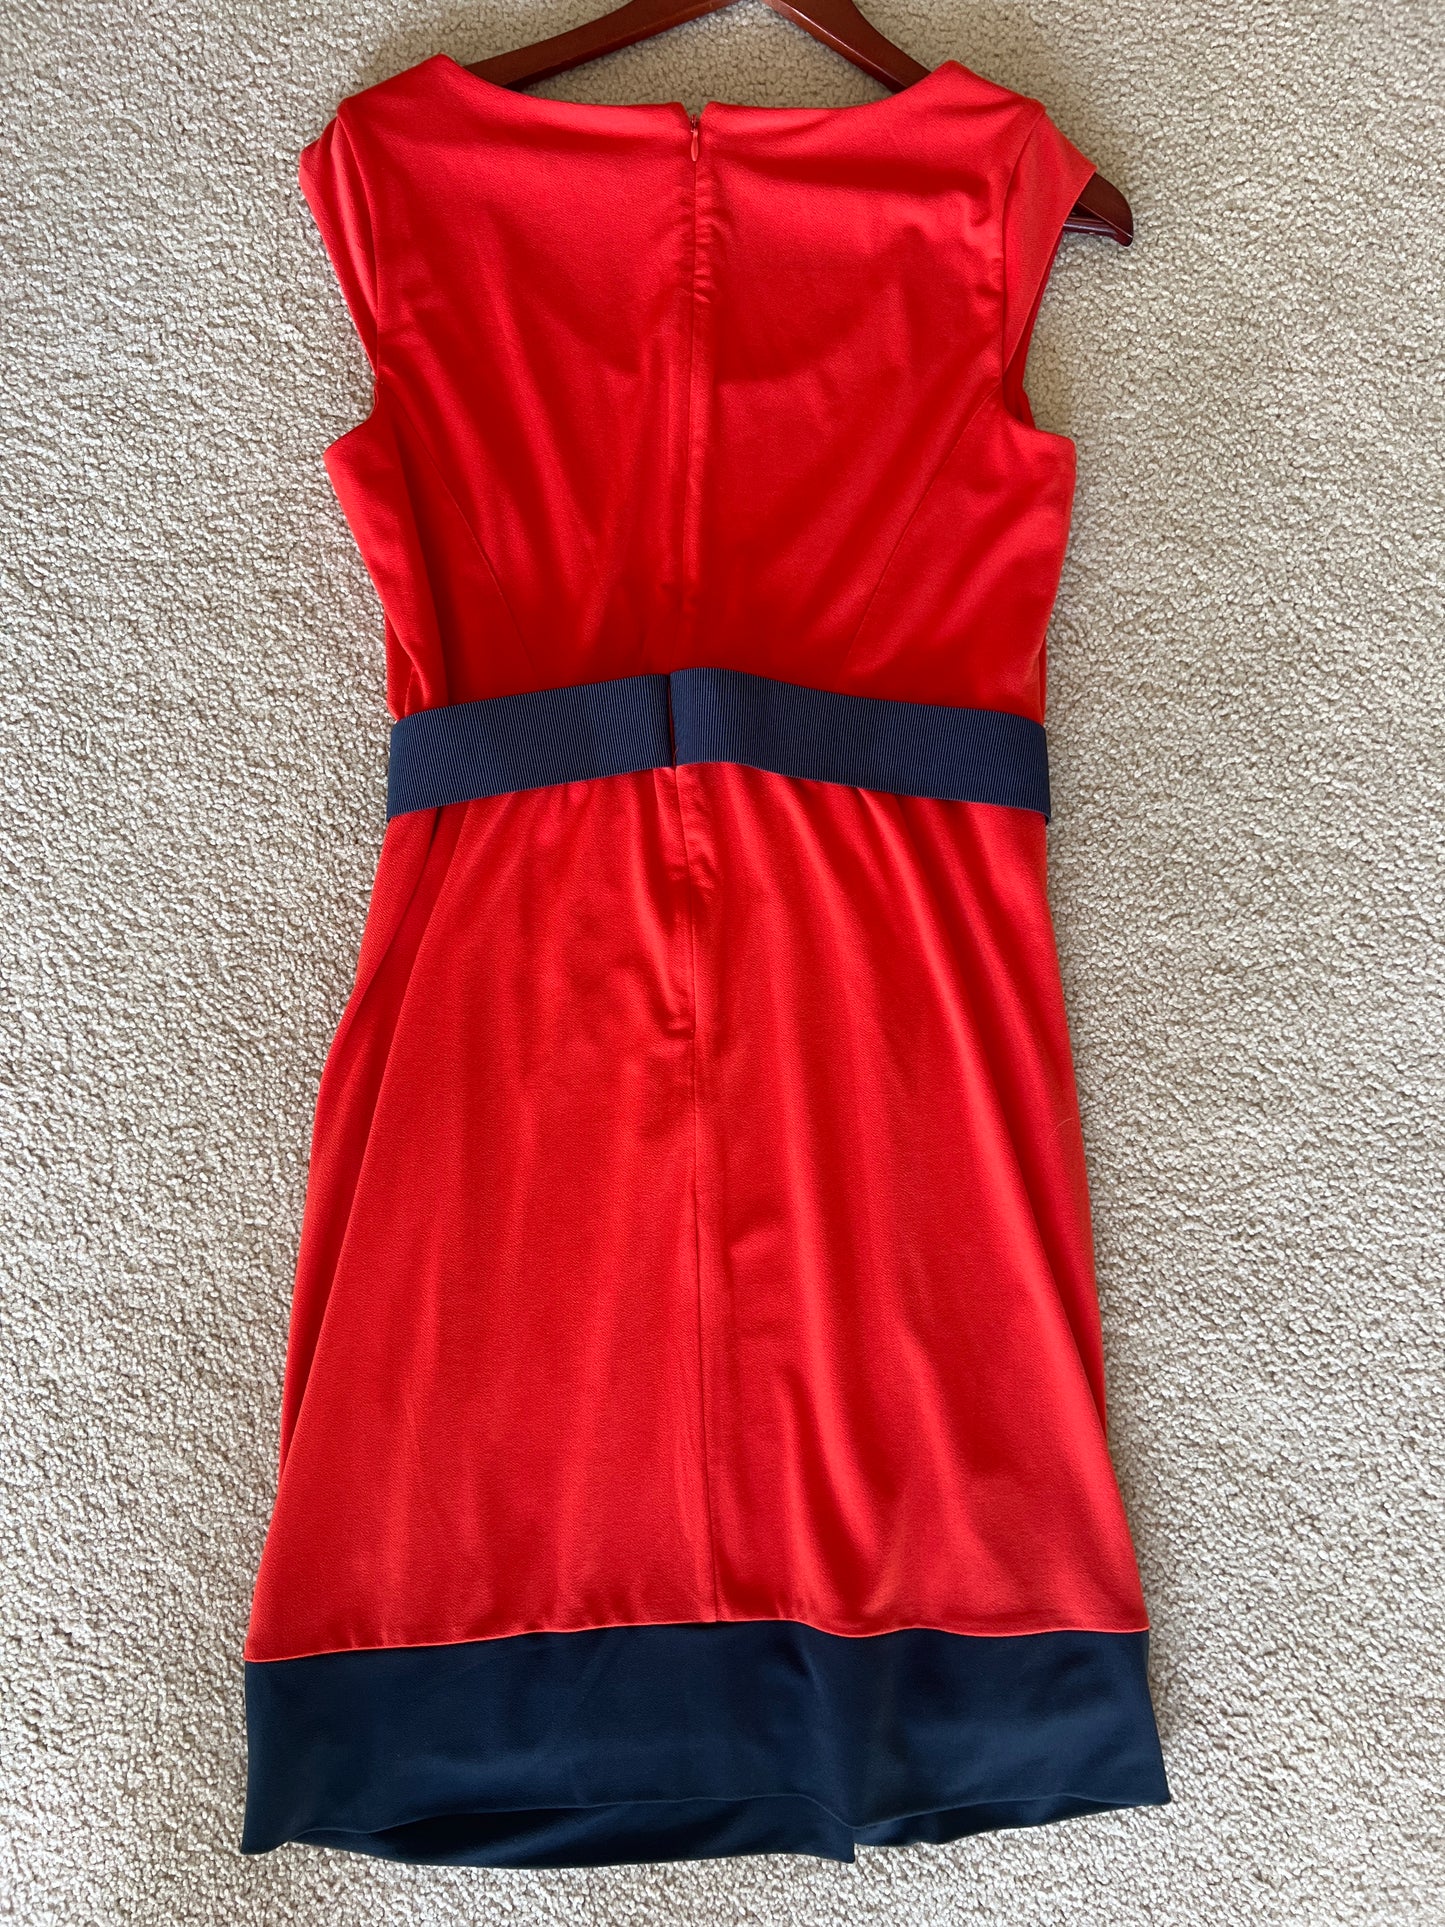 Ann Taylor orange sleeveless dress, size 8